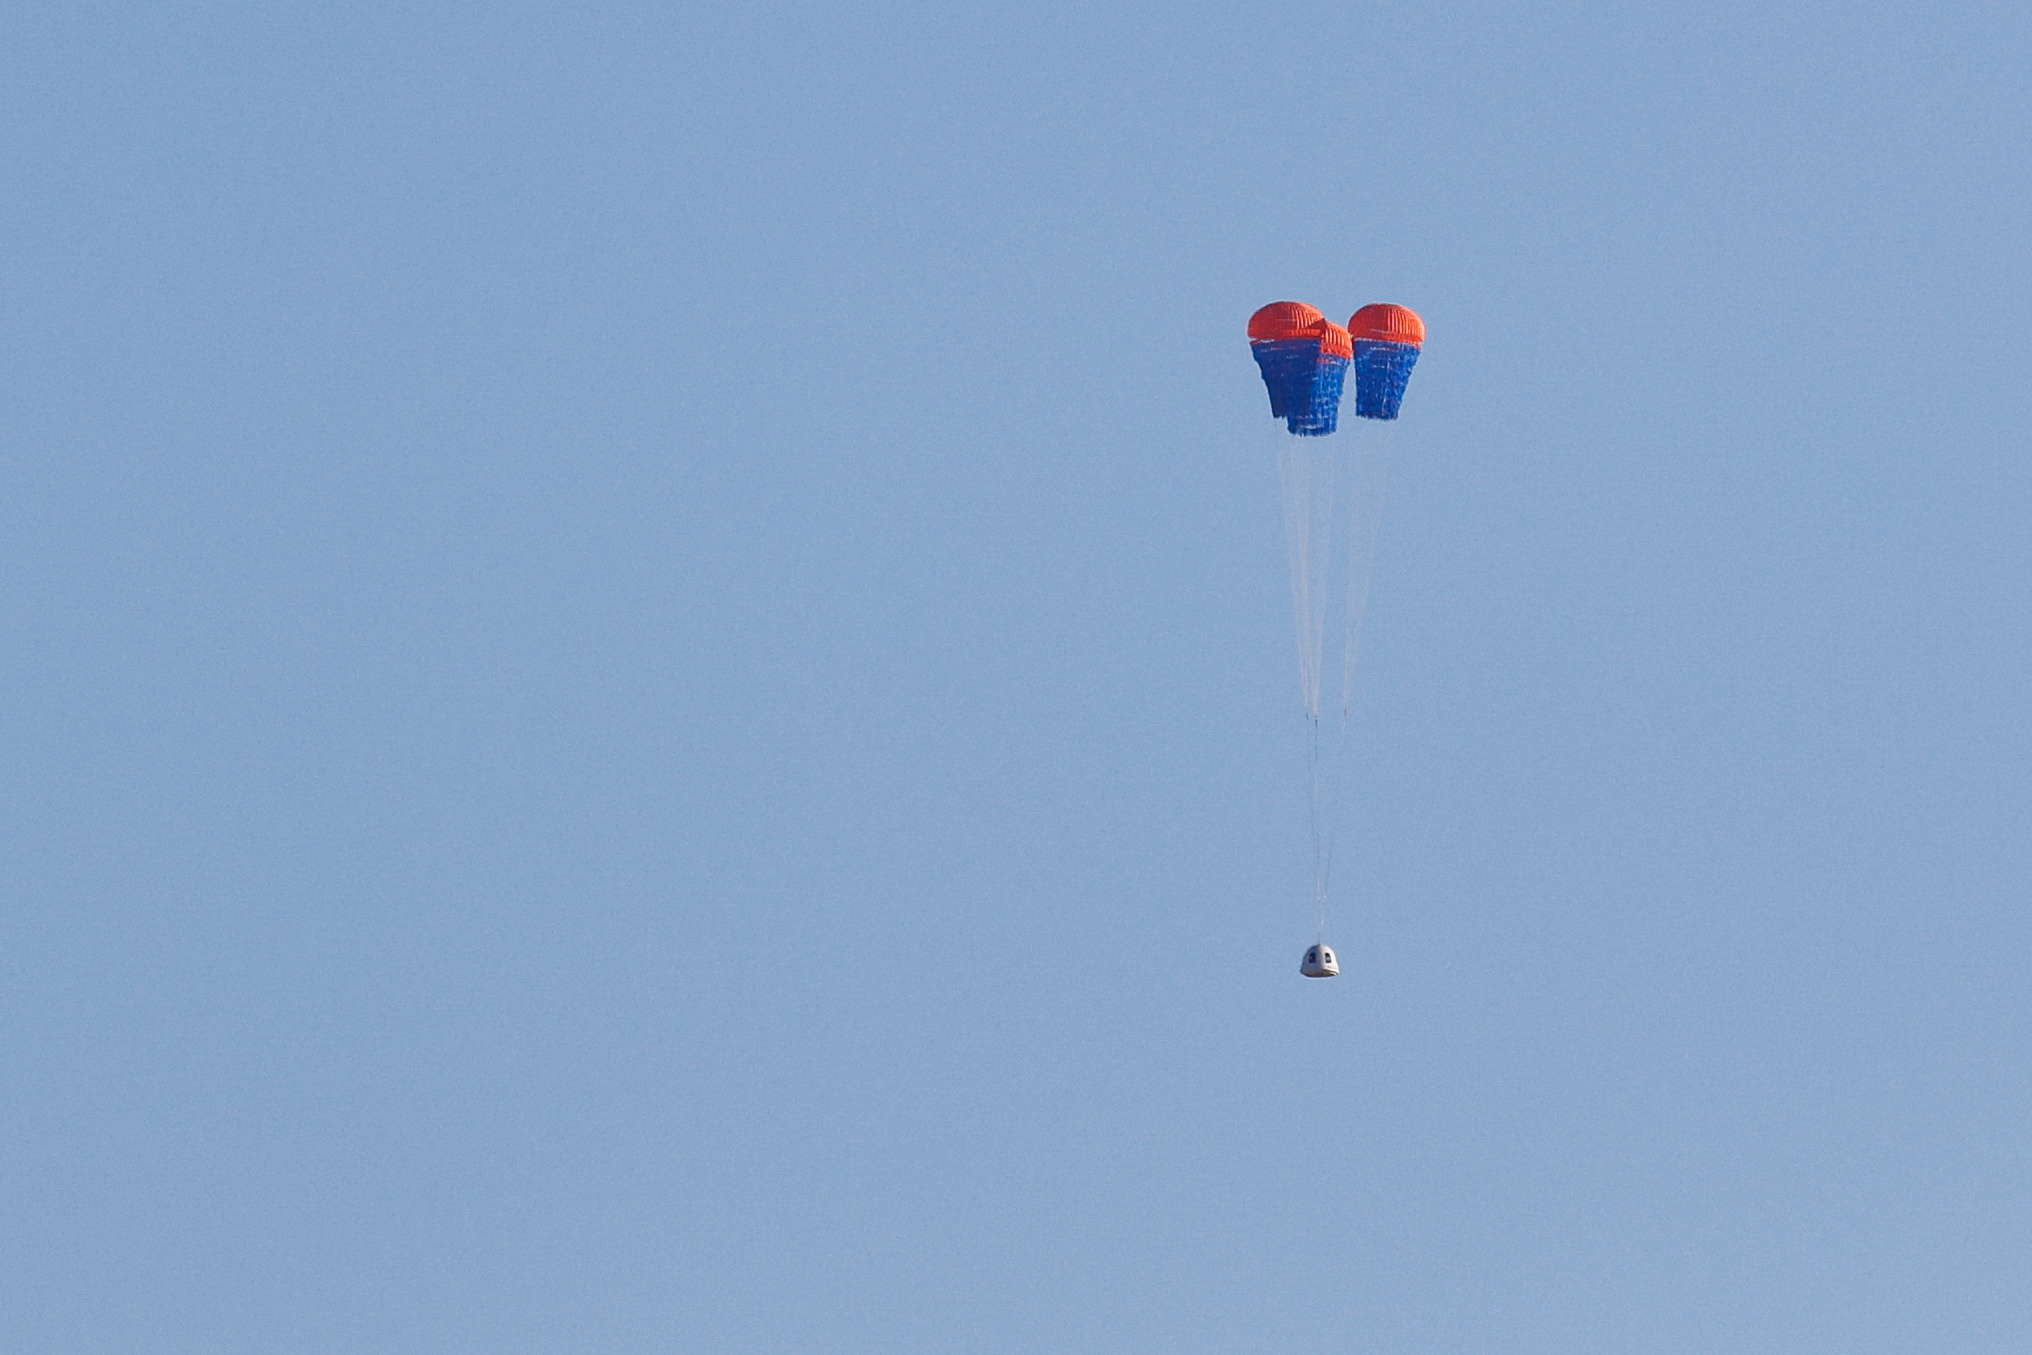 Blue Origin's rocket New Shepard blasts off, near Van Horn, Texas